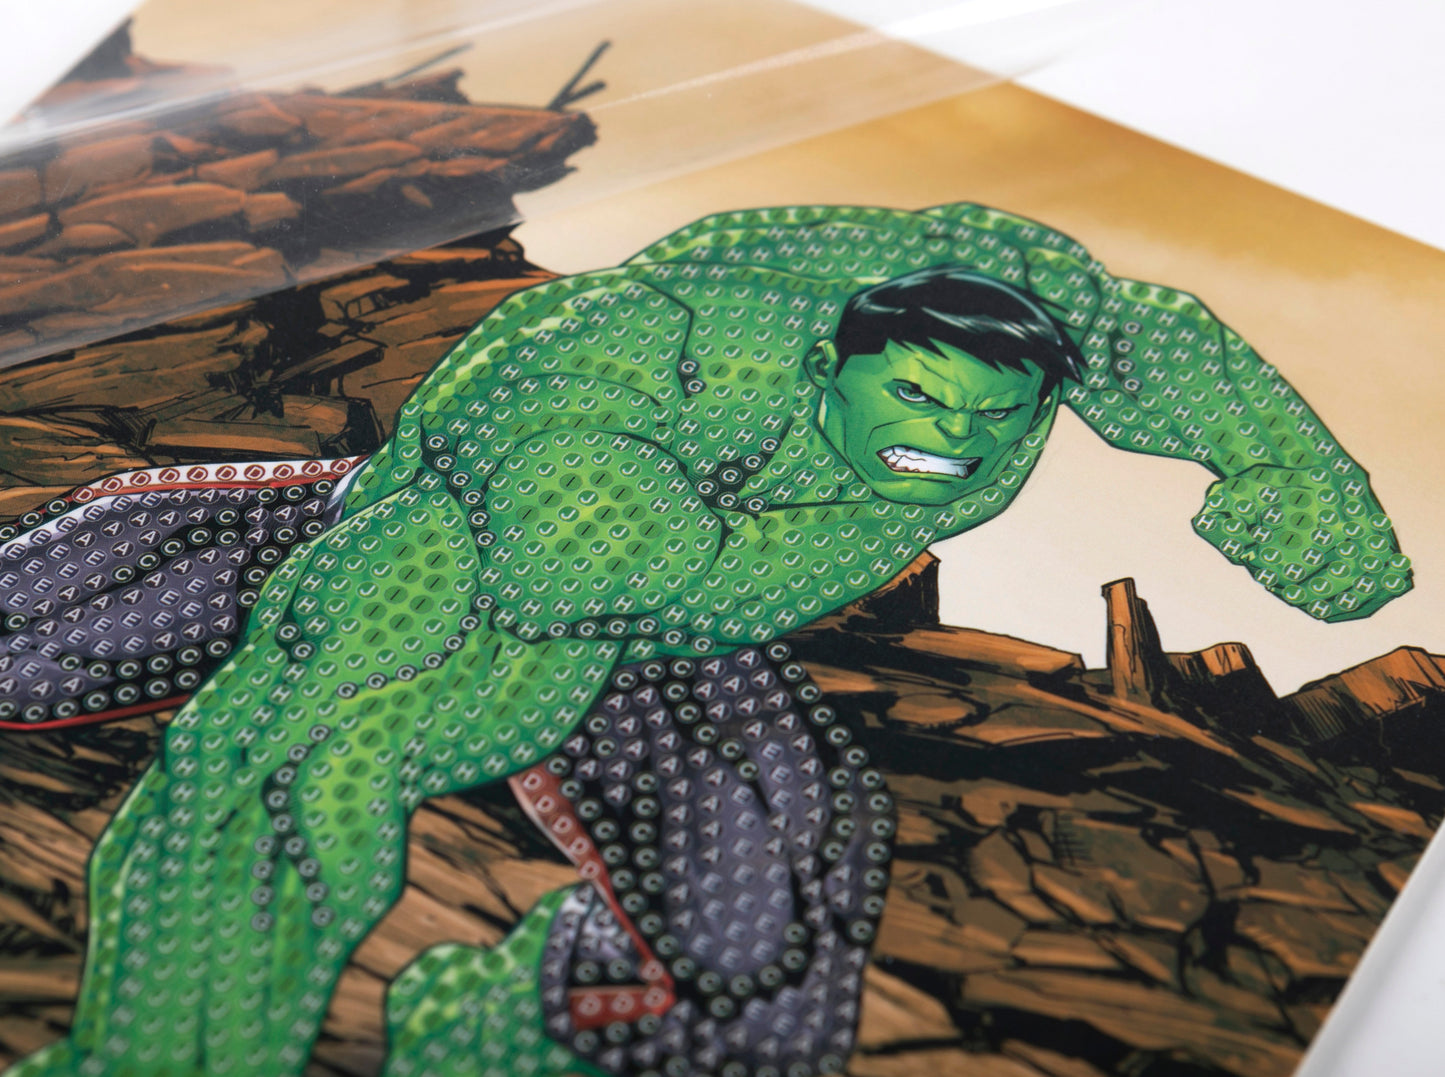 CCK-MCU903: Hulk 18x18cm Crystal Art Card